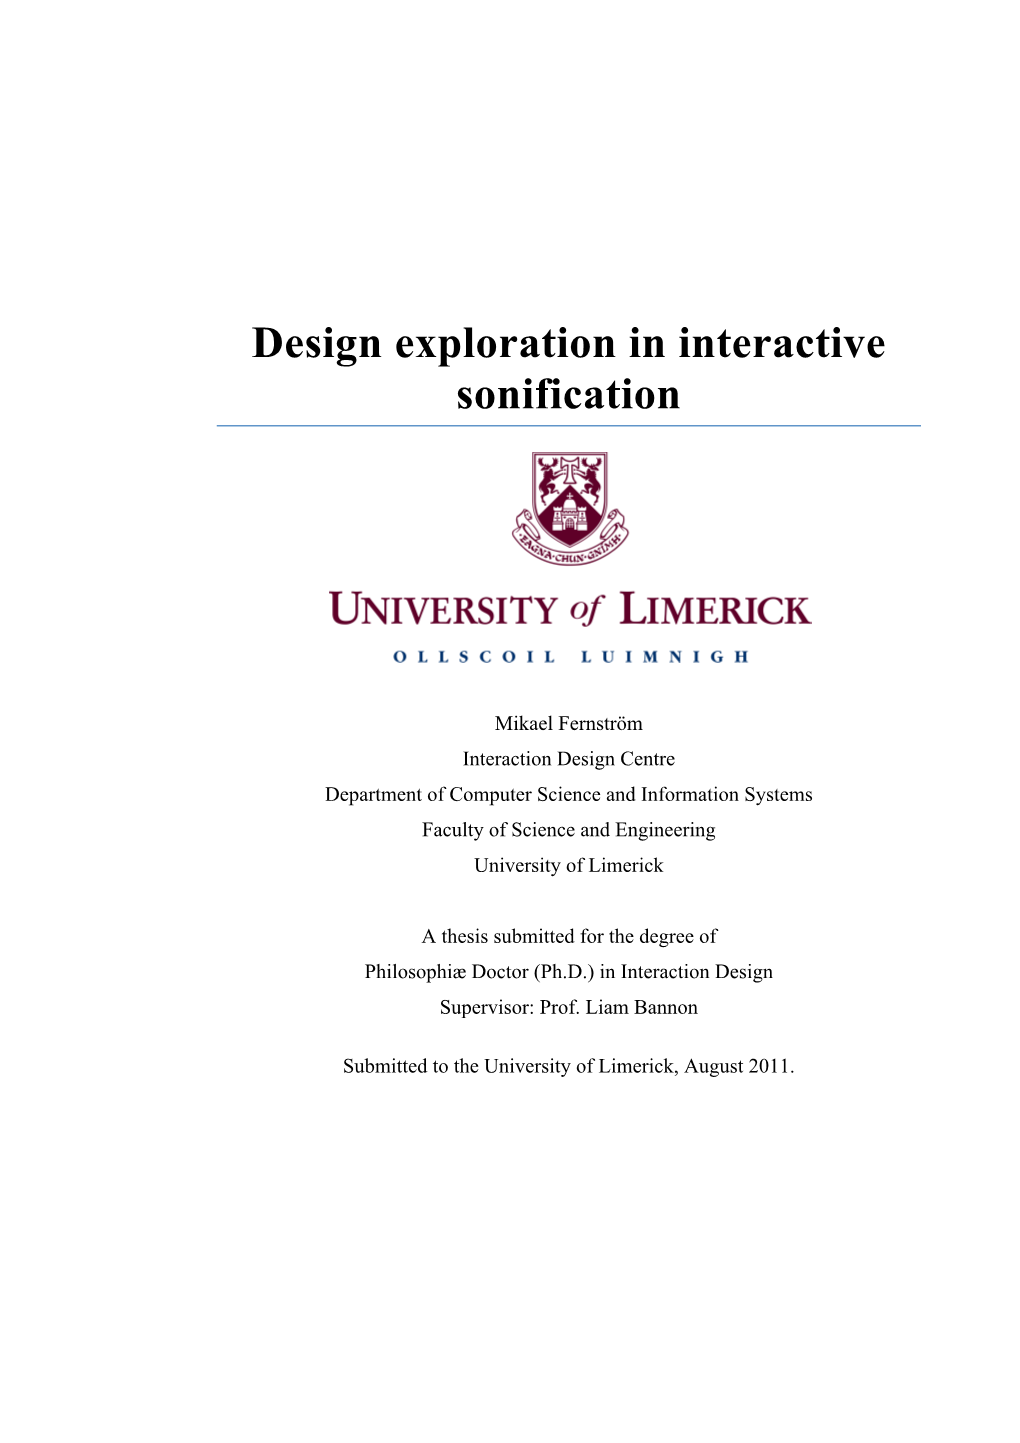 Design Exploration in Interactive Sonification